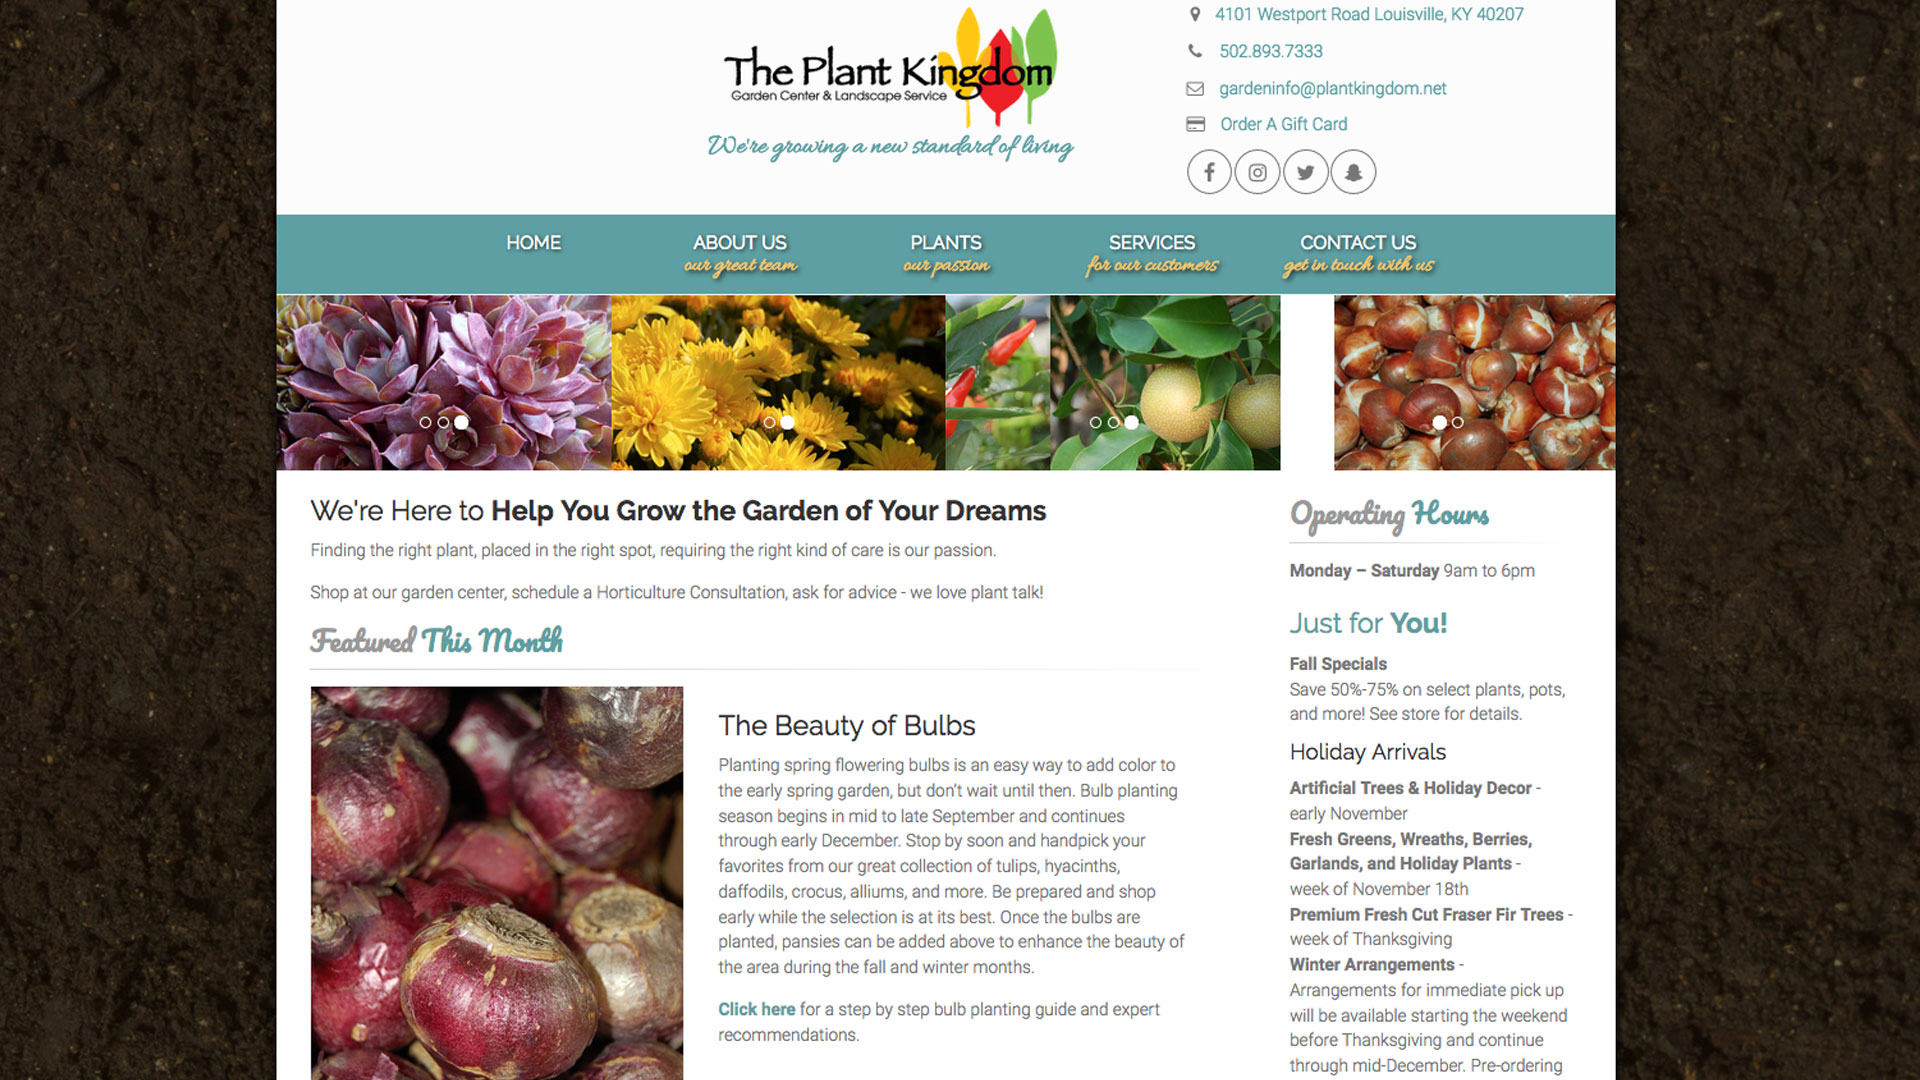 Plant Kingdom website home page image